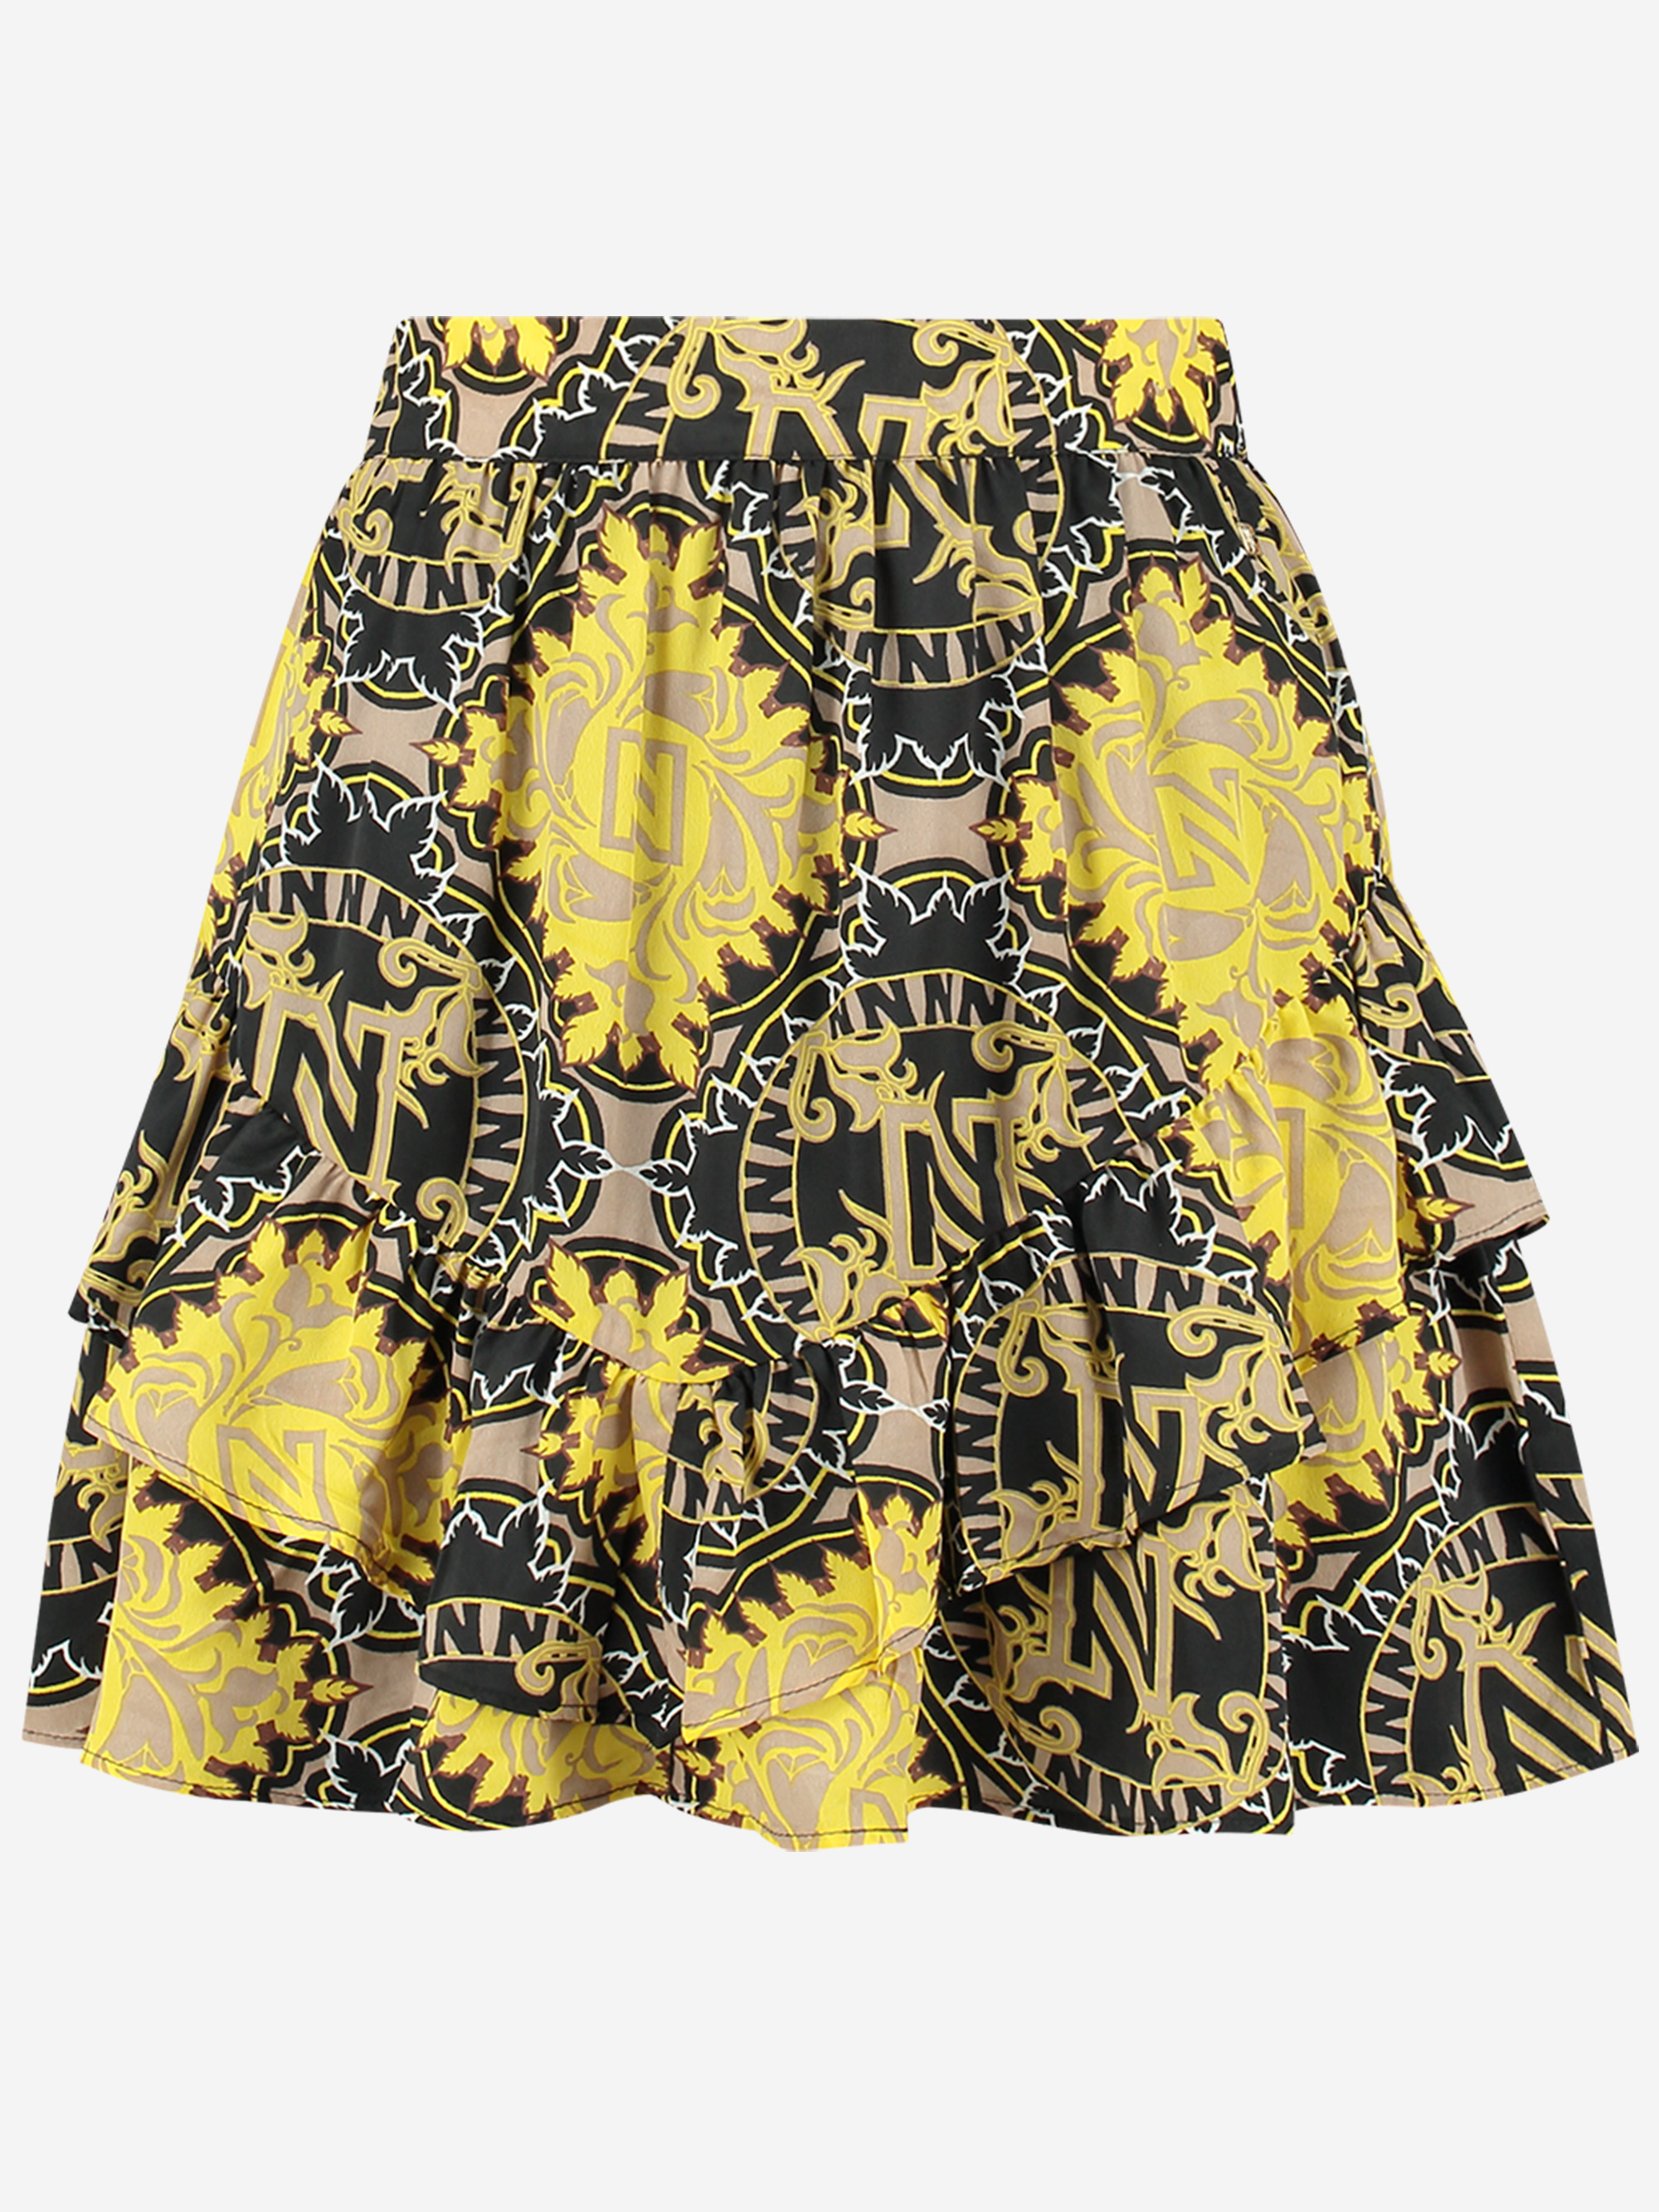 Skirt with ruffles